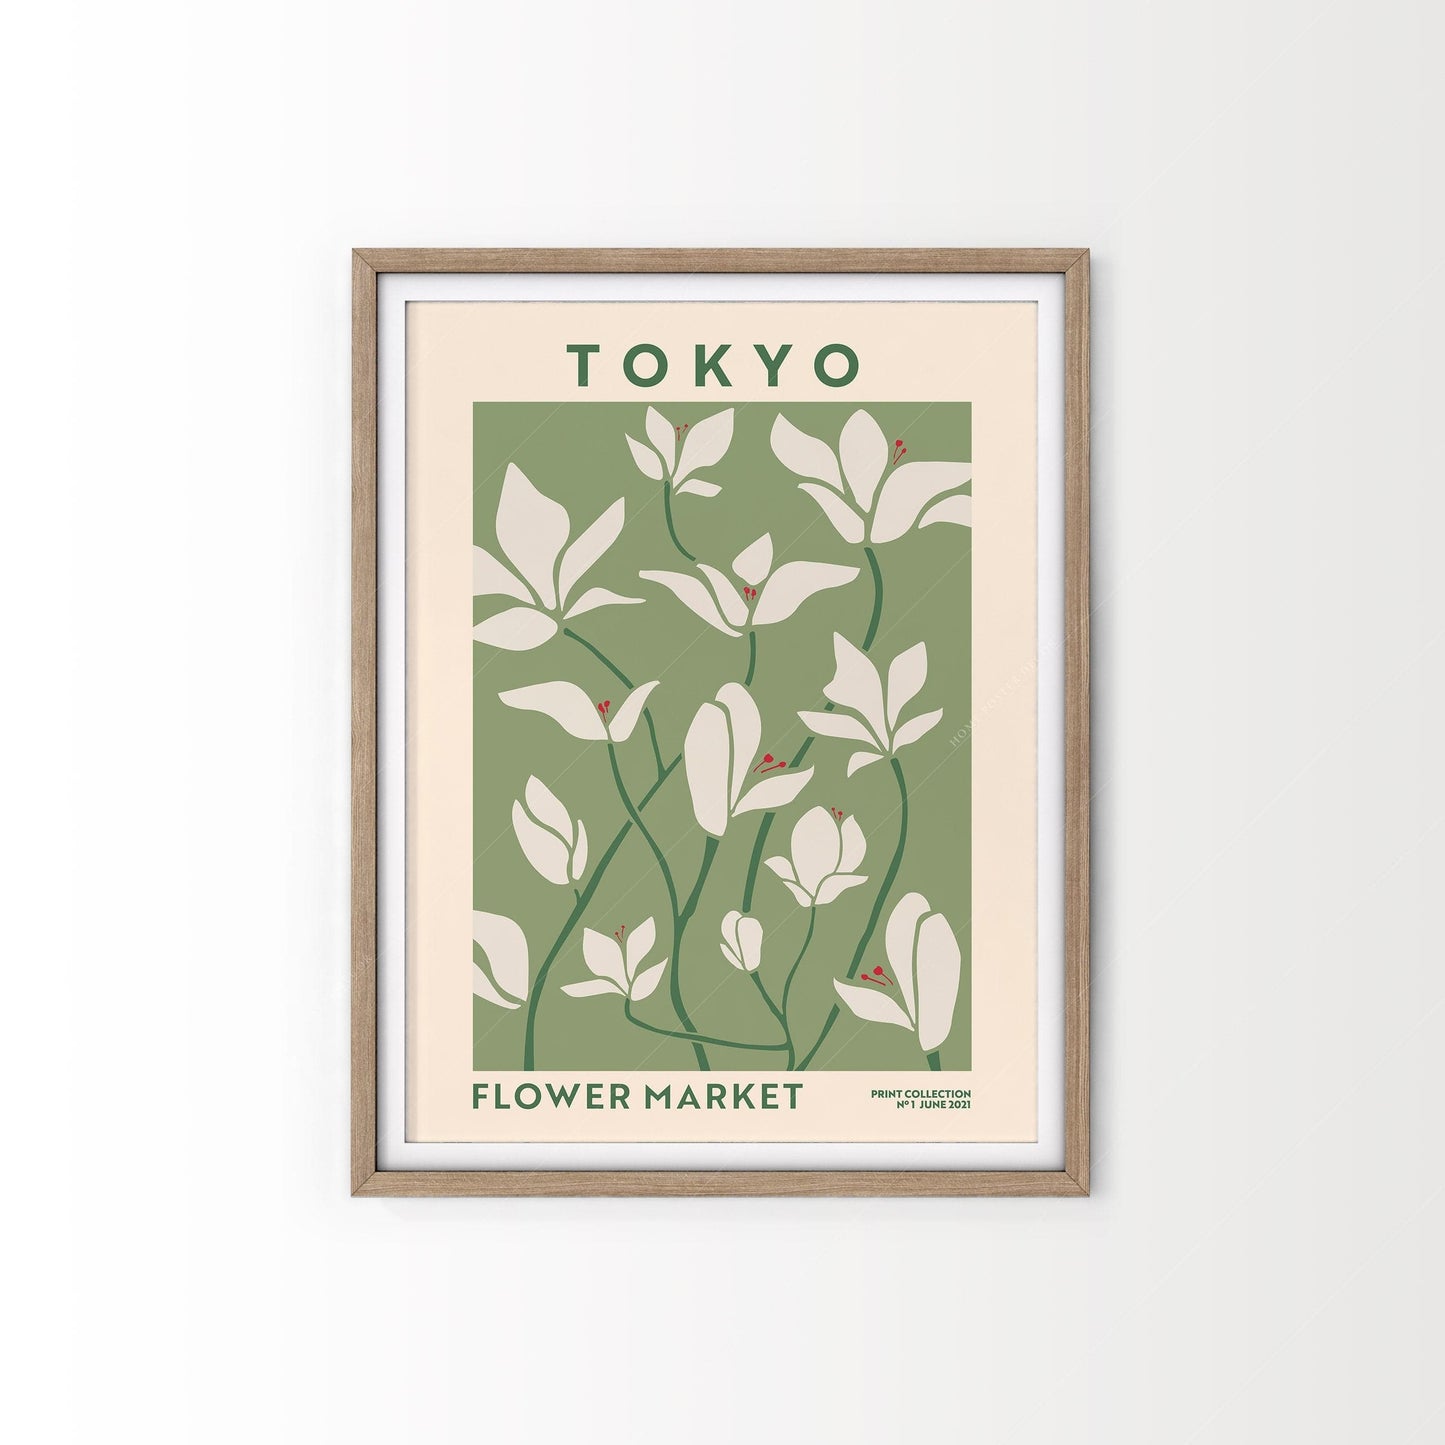 Home Poster Decor Single Flower Market Printed Shipped, Flower Market Tokyo, Floral Wall Art, Spring Wall Decor, Flower Market Poster, Retro Decor, Gift Idea